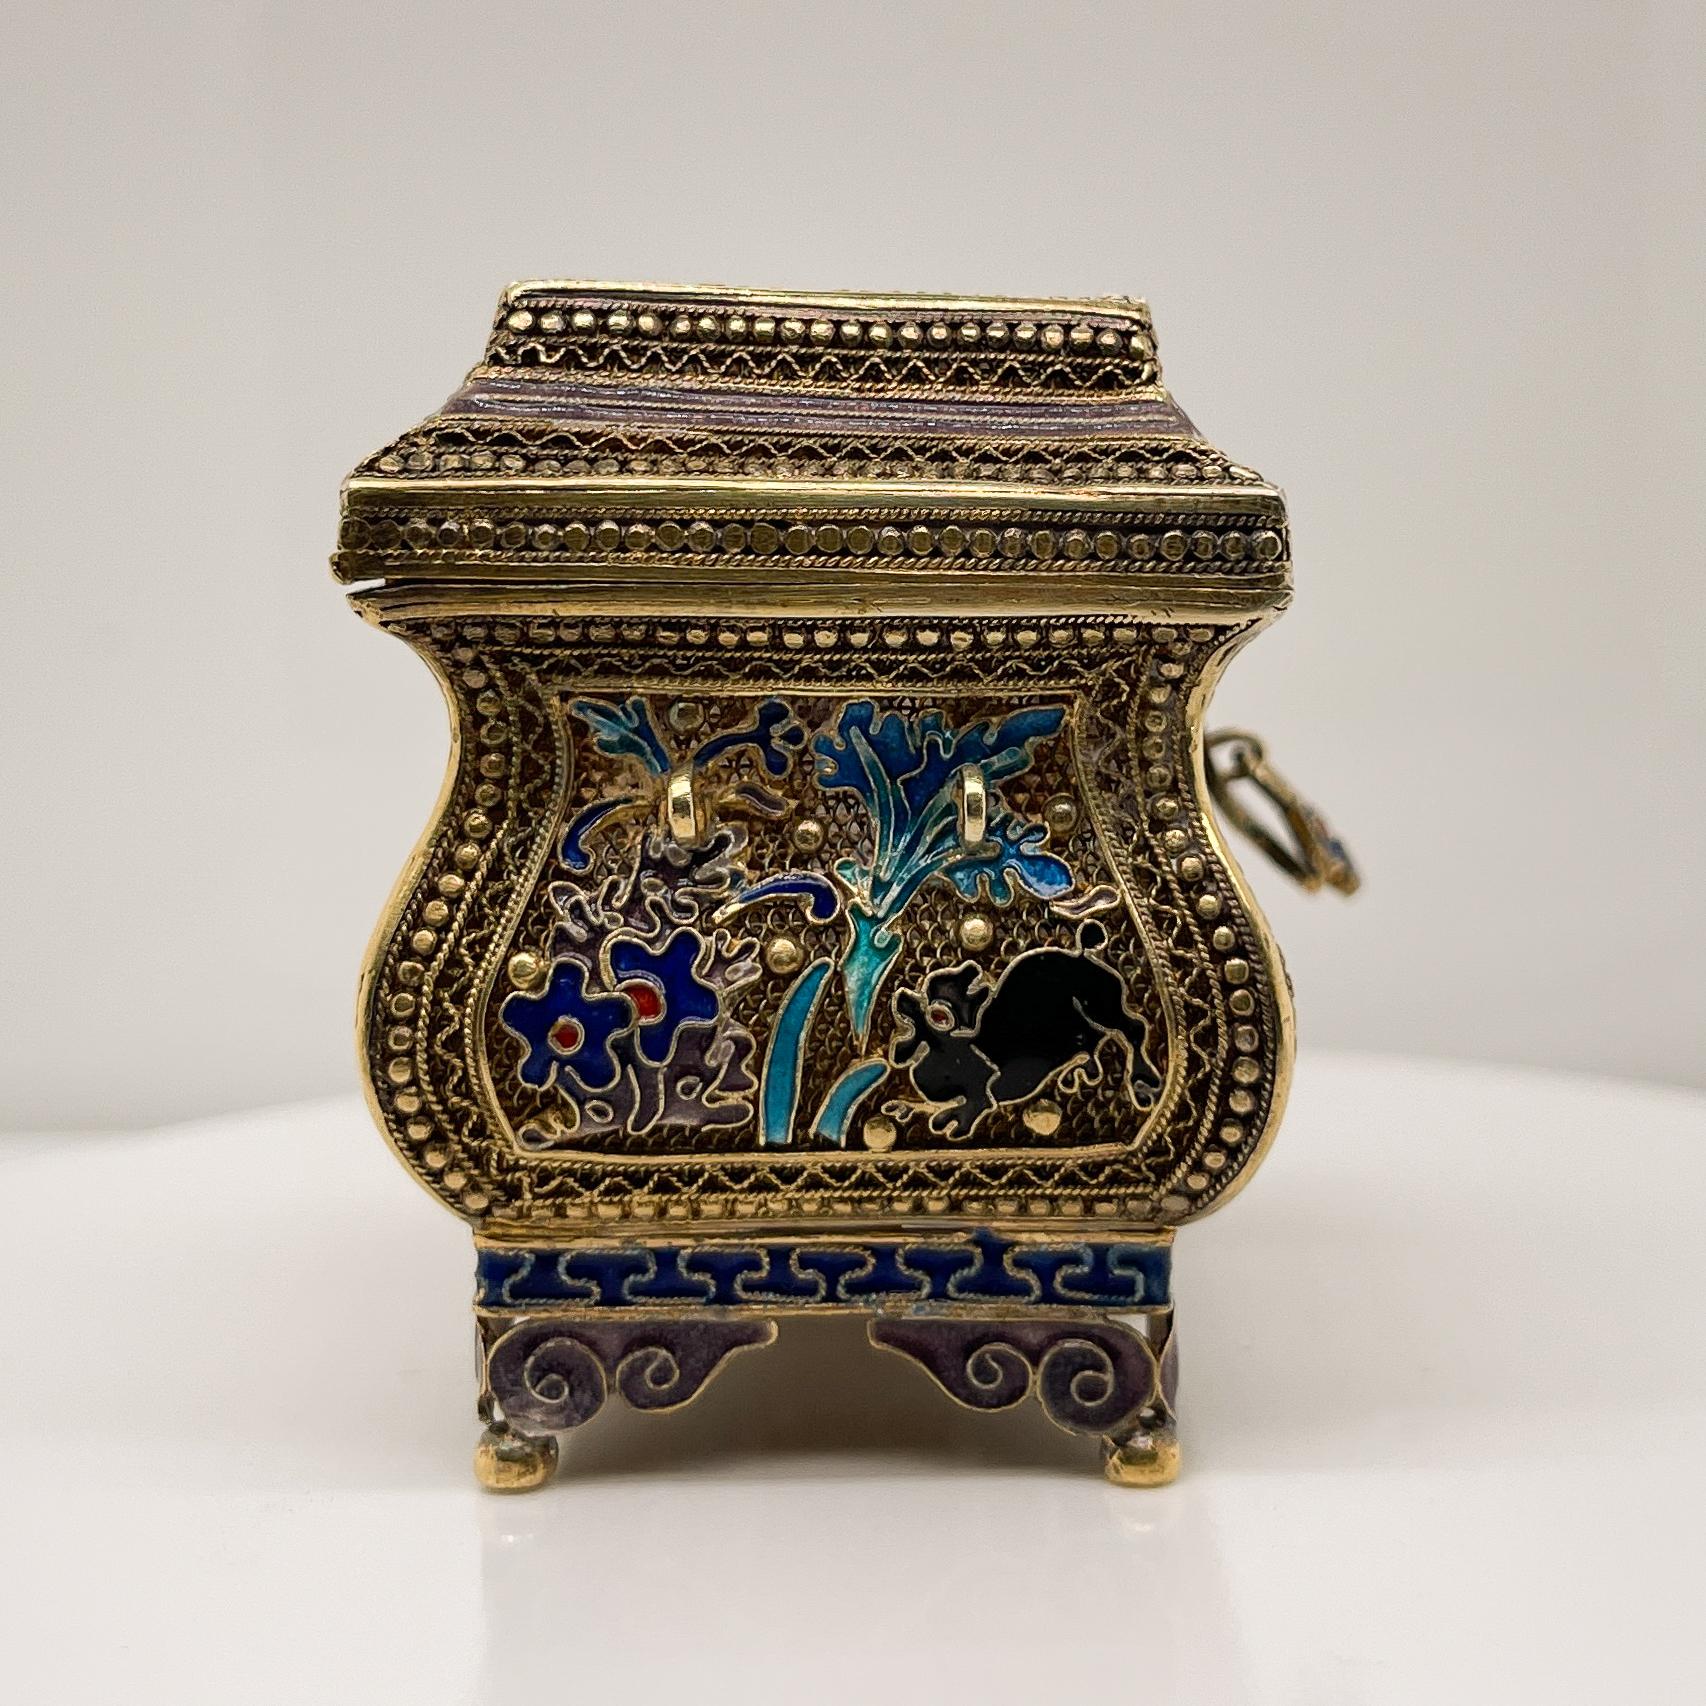 Women's or Men's Vintage Miniature Chinese Gilt Silver Filigree & Enamel Box or Treasure Chest